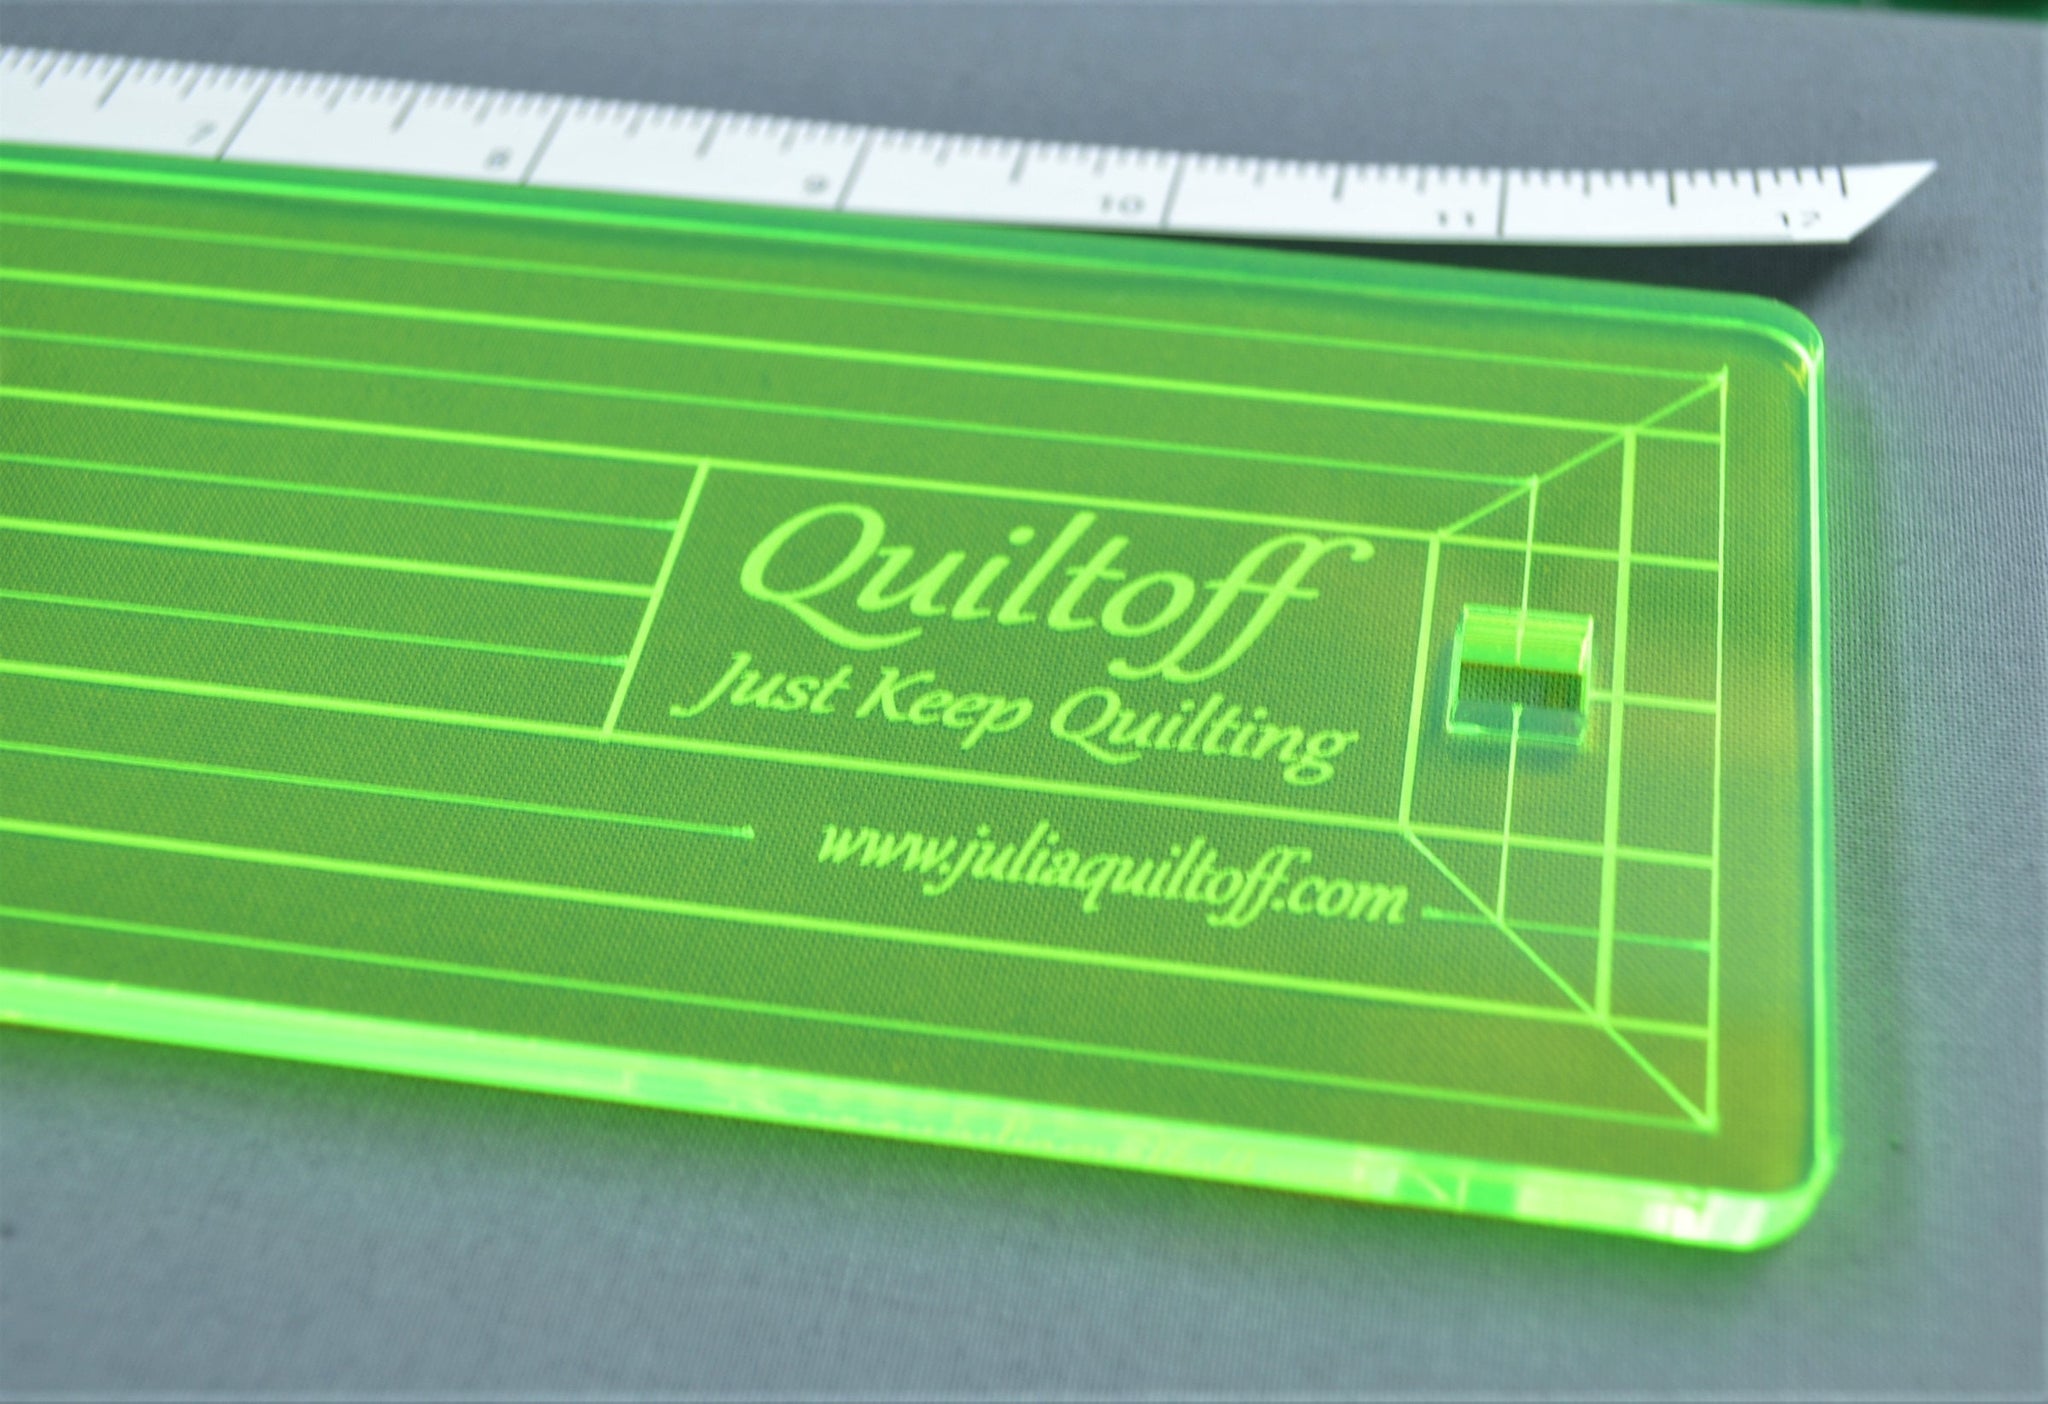 Mini Crosshatch & Ditch Longarm Ruler – Cut Sew Quick